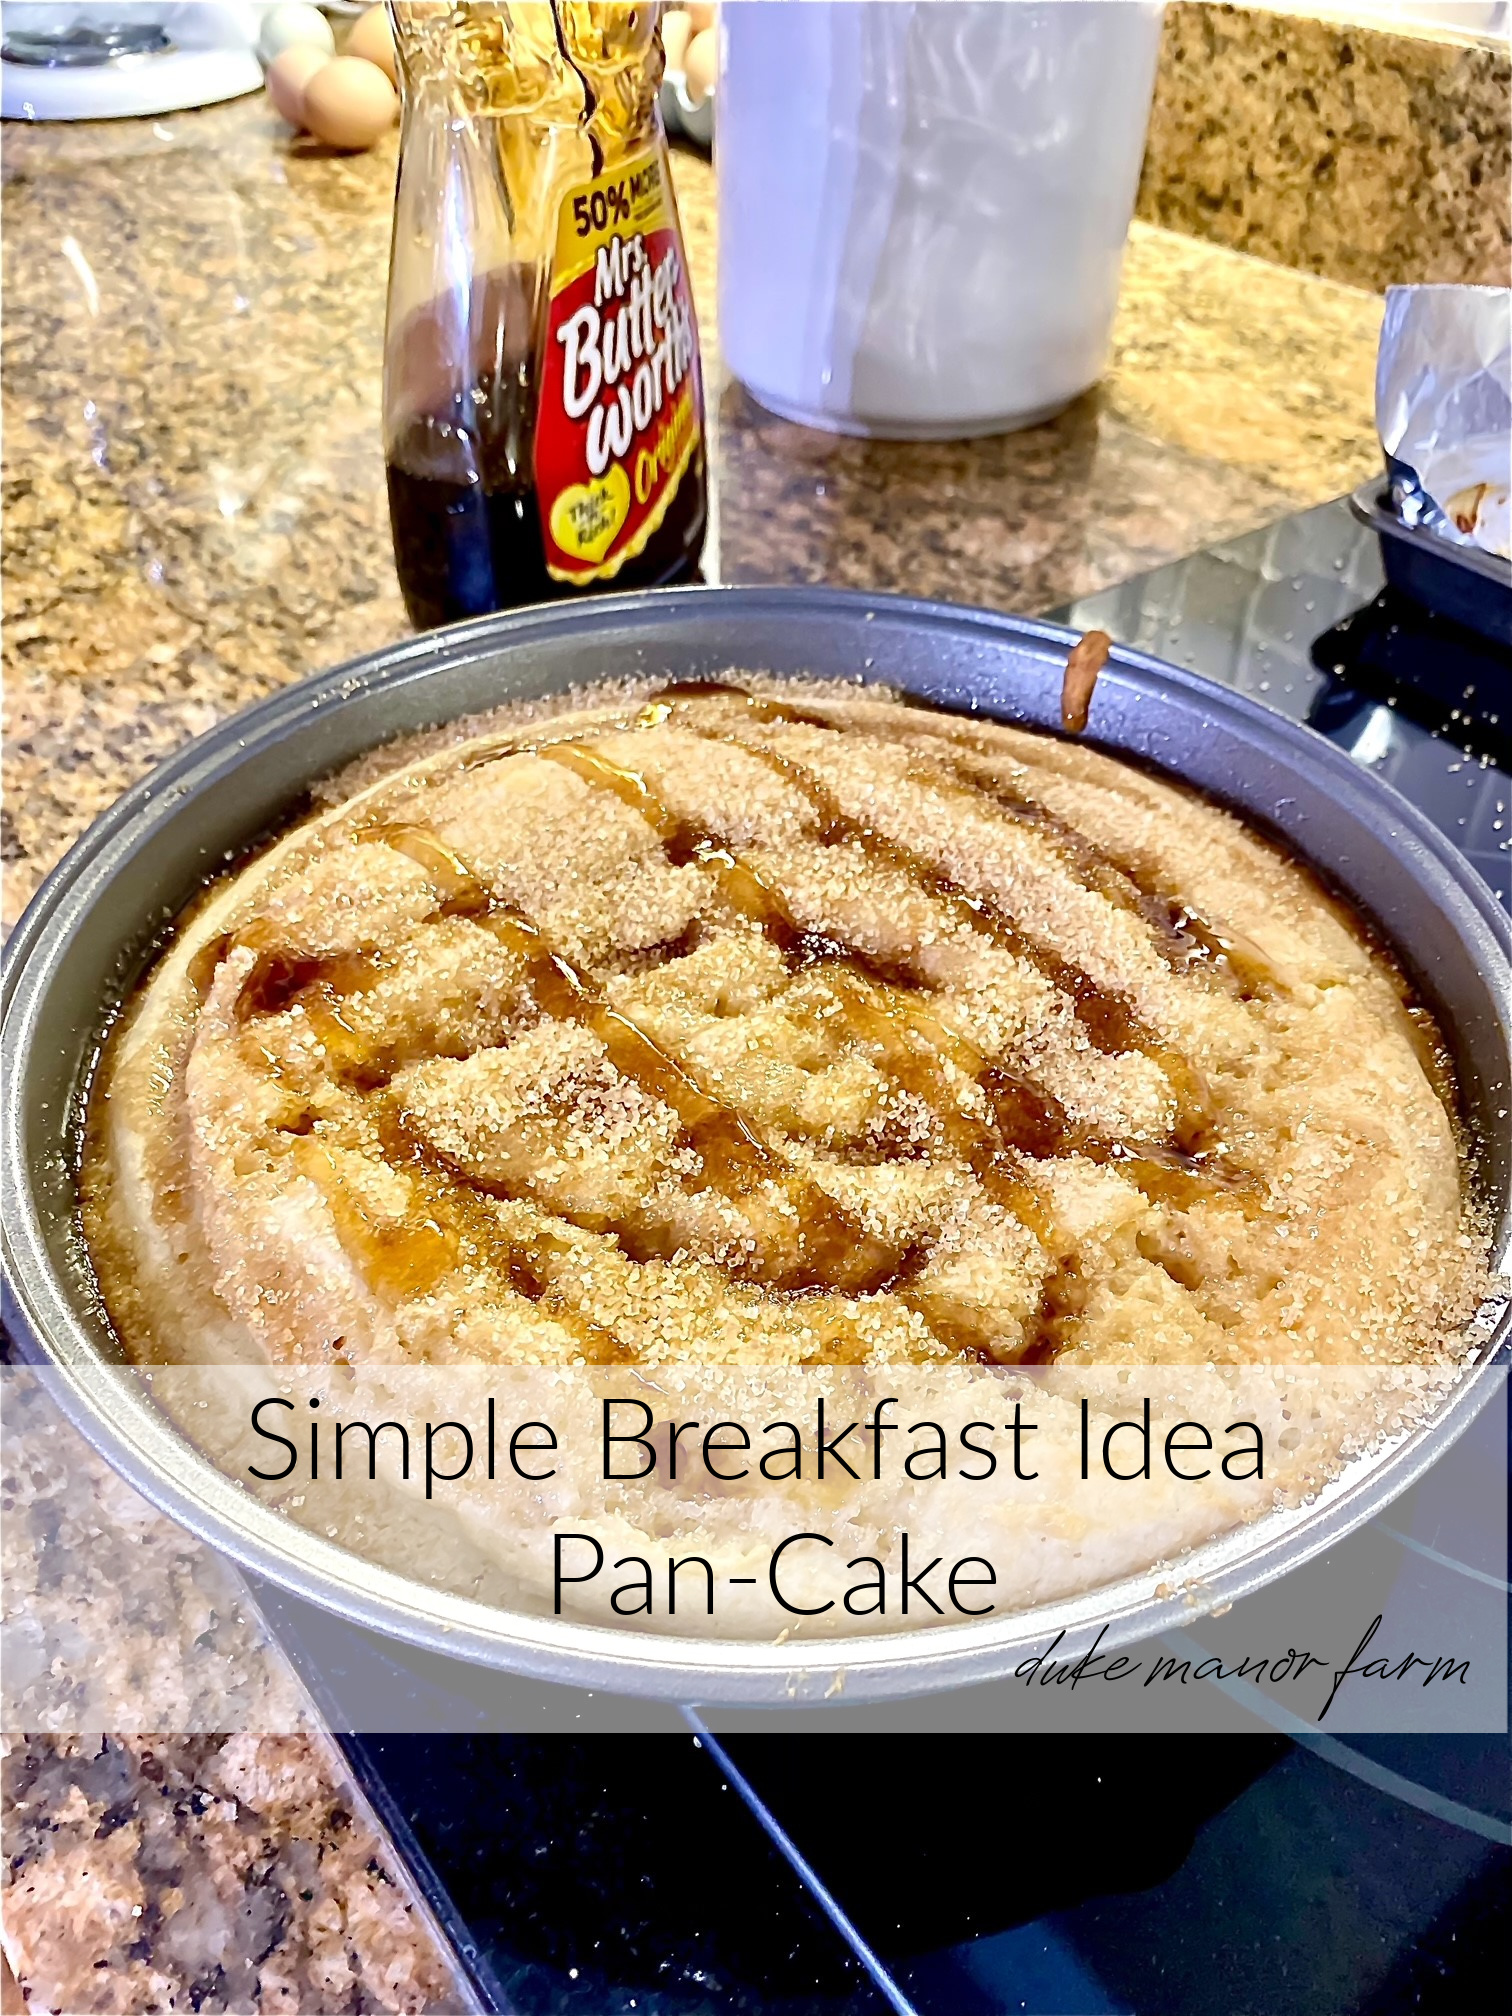 Simple and Delicious Breakfast Idea